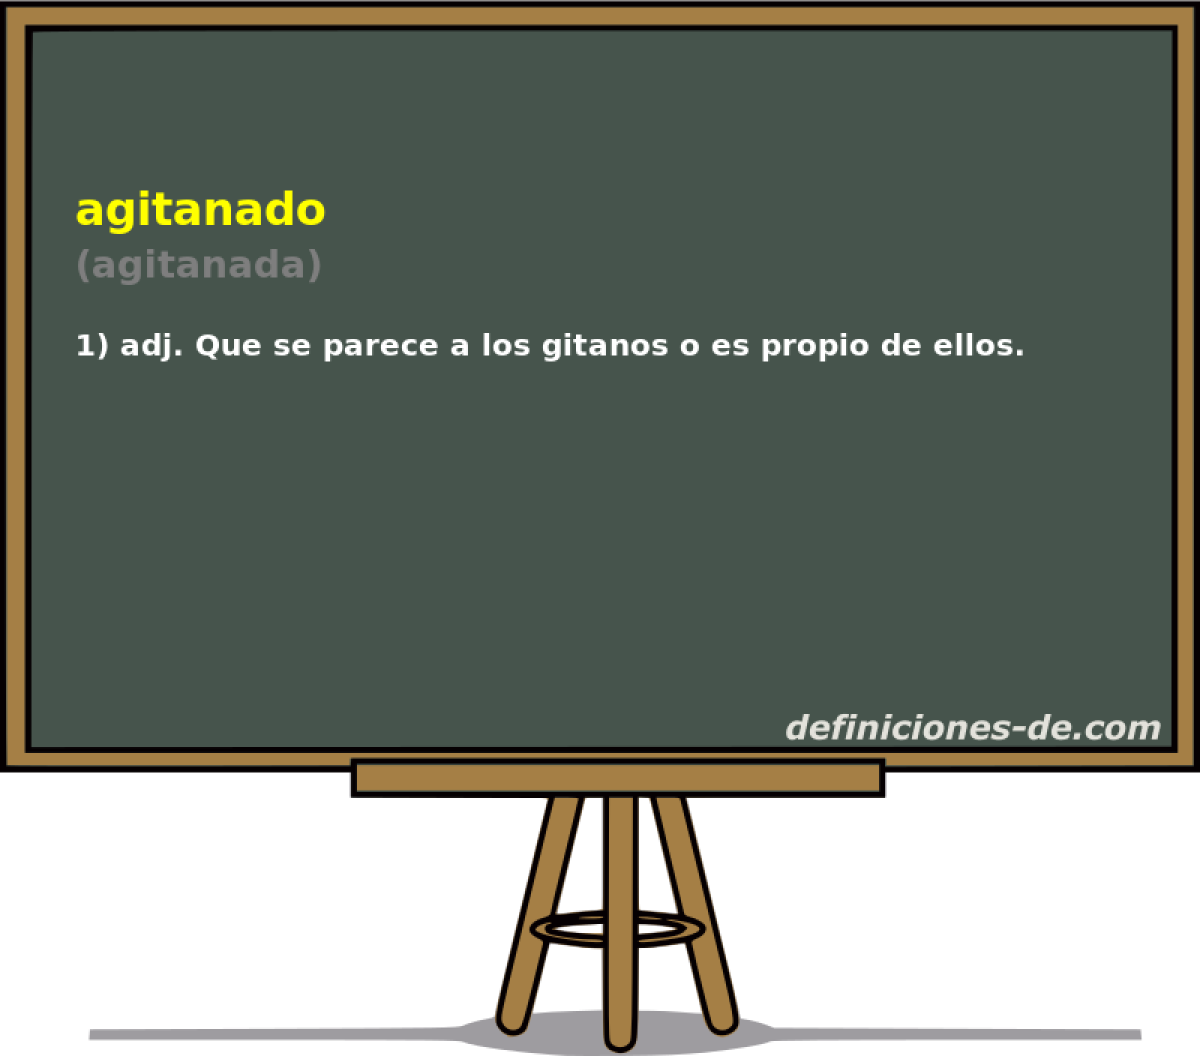 agitanado (agitanada)